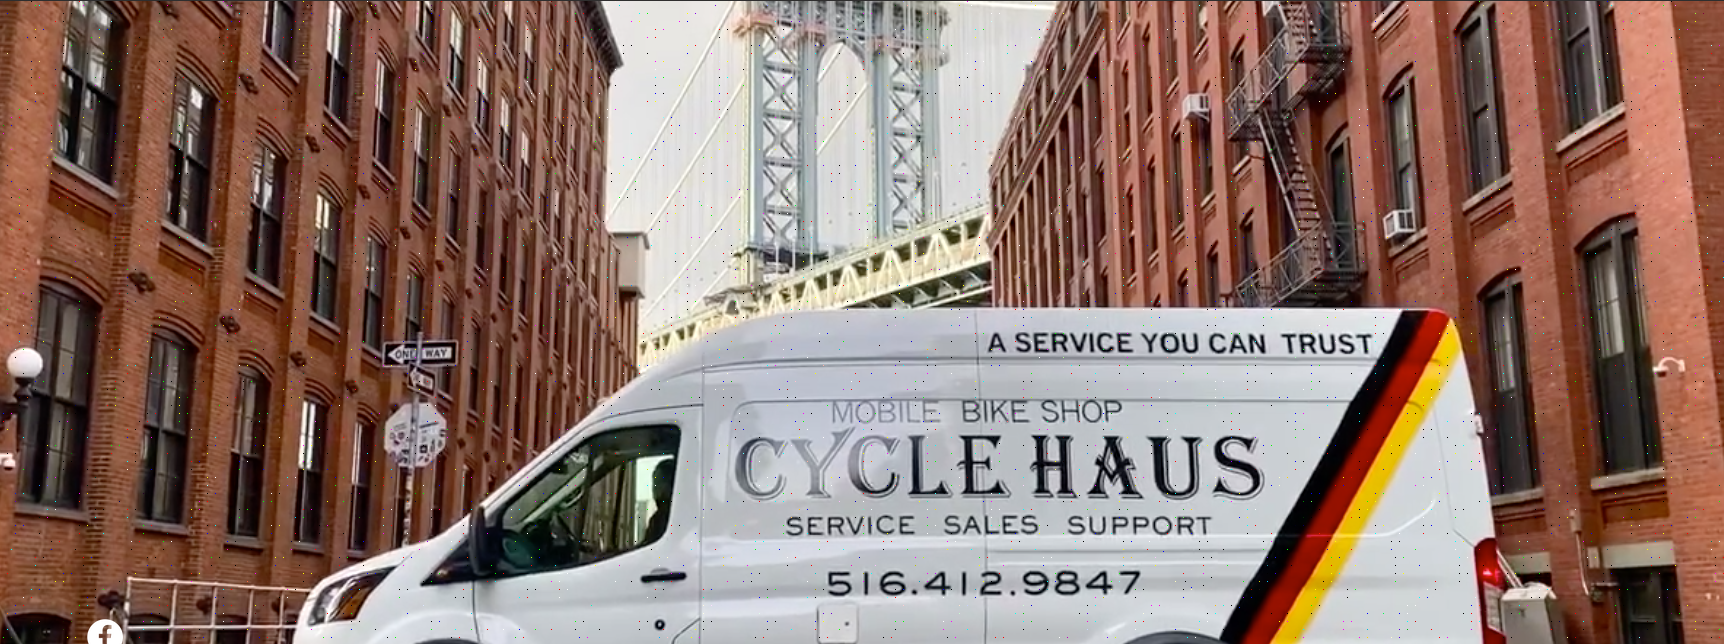 Cycle Haus - Mobile Bike shop